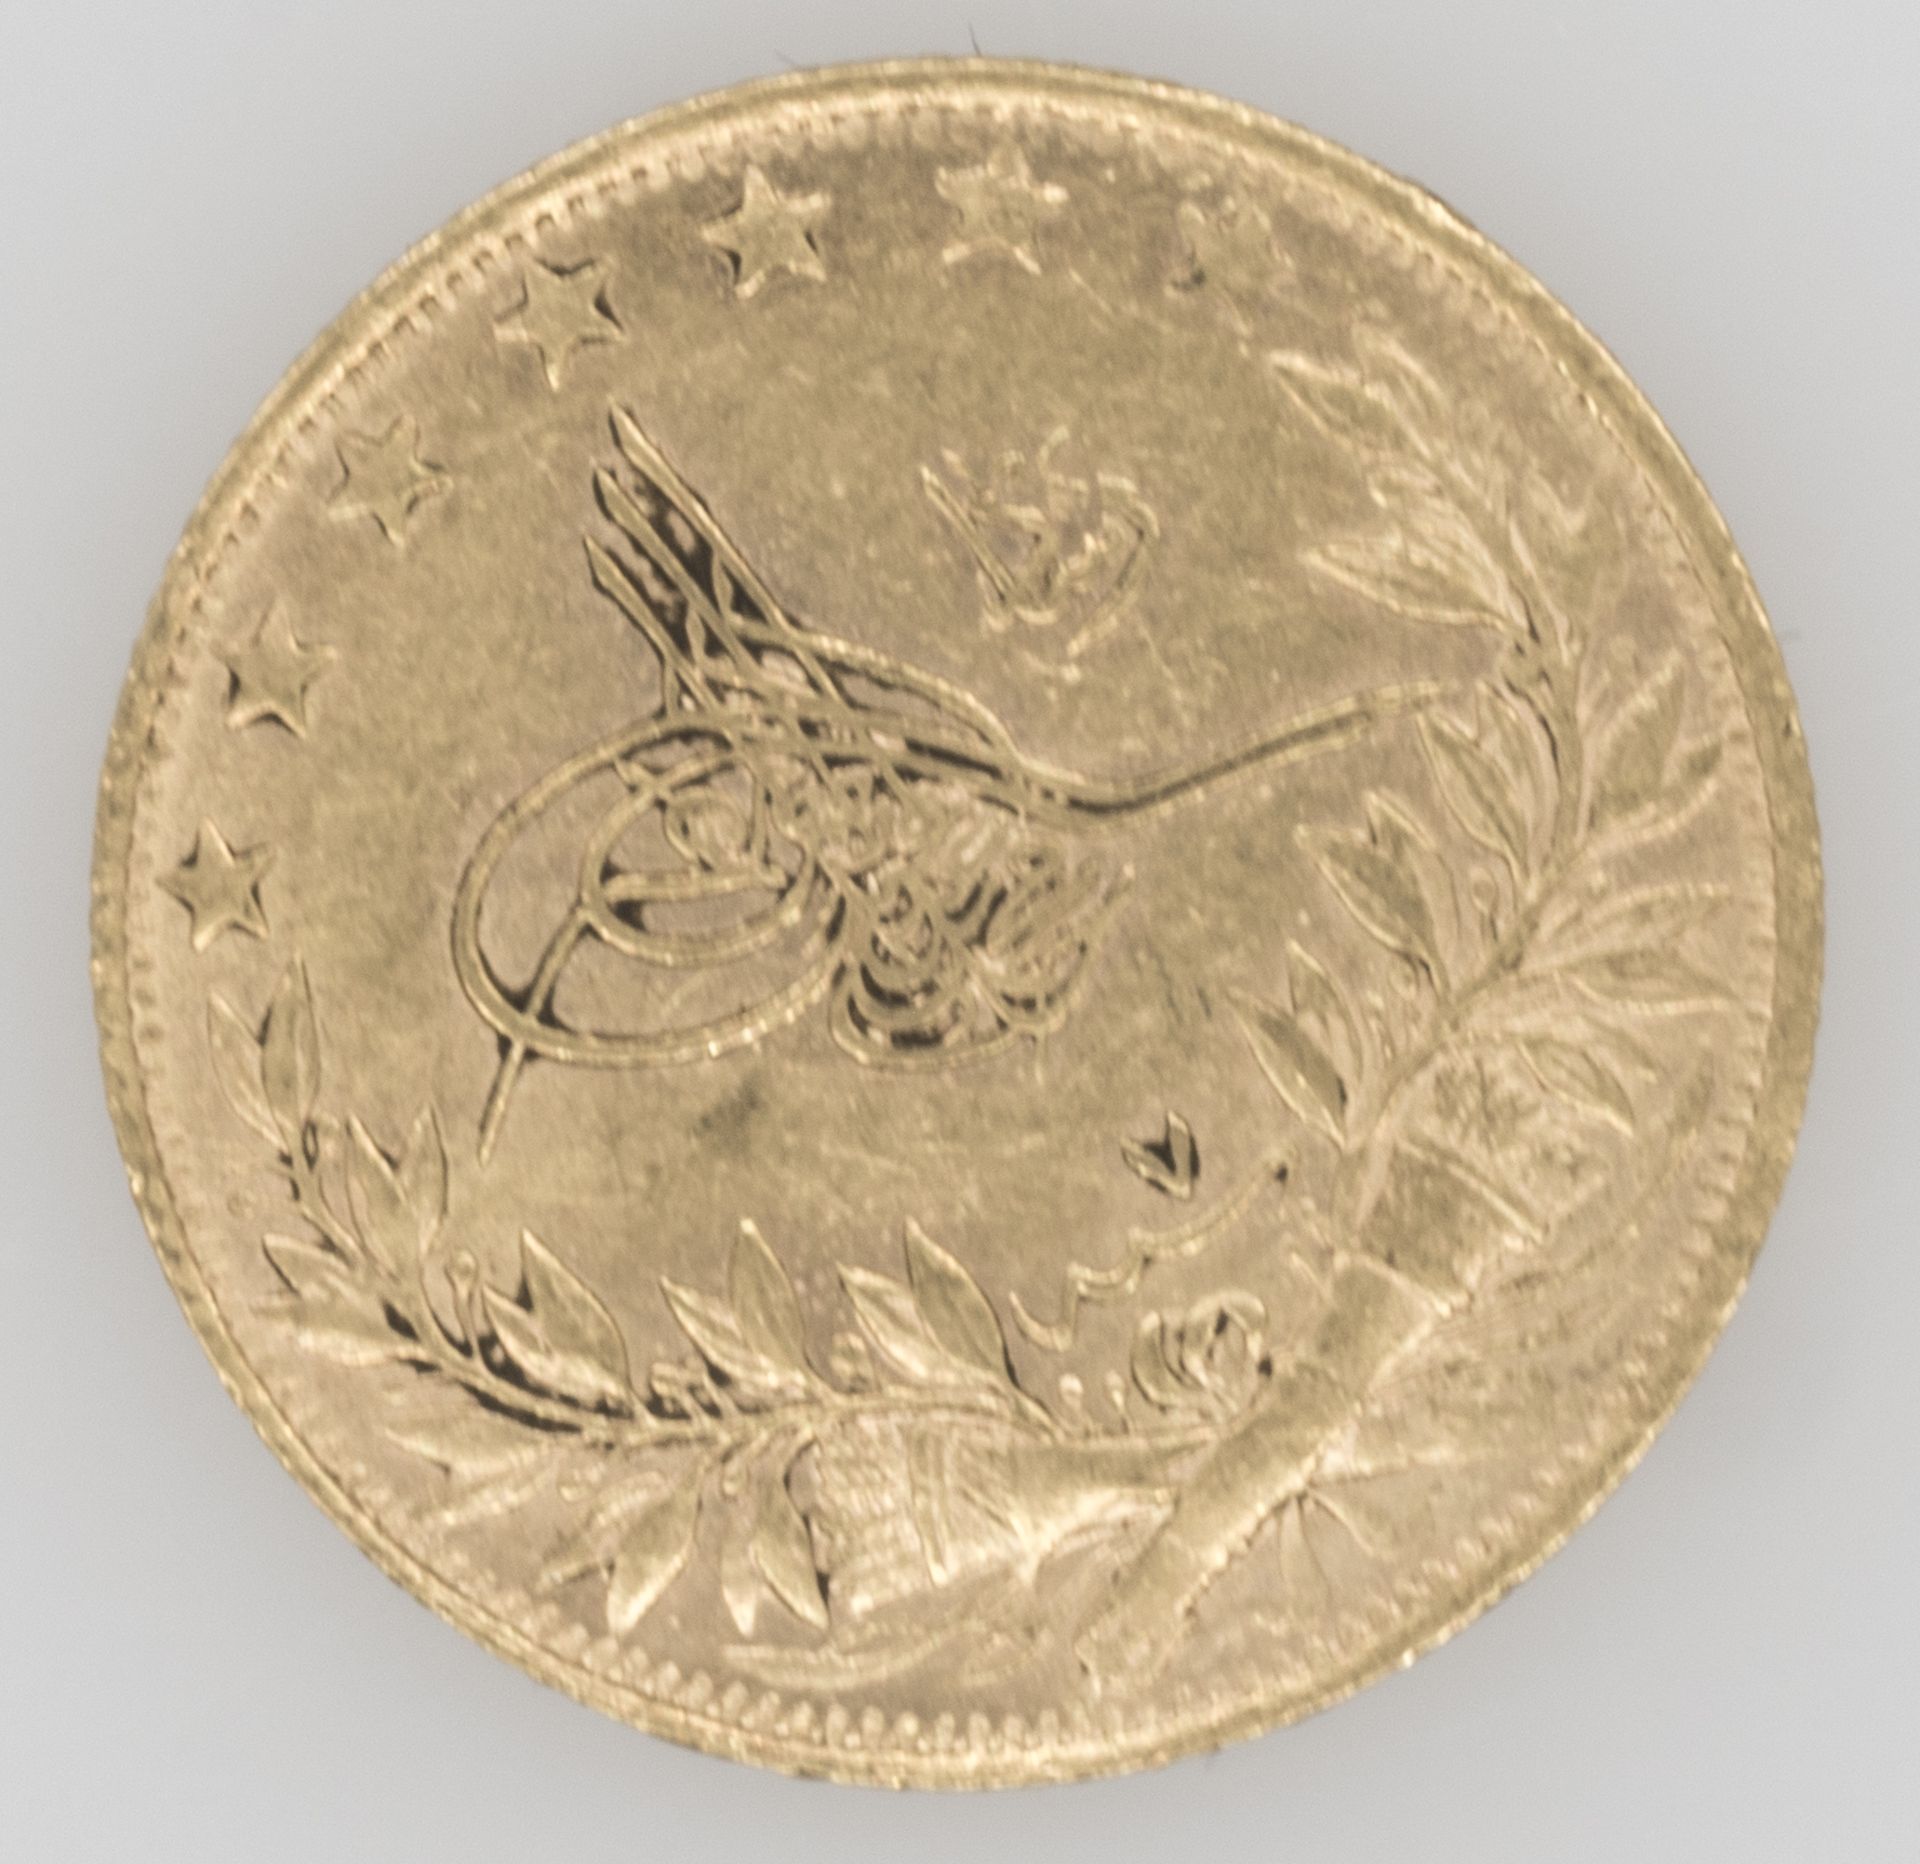 Türkei 1909 - 1918, 100 Piaster - Goldmünze "Sultan Mohammed V.". Gold 916/1000. Gewicht: ca. 7,34 - Image 2 of 3